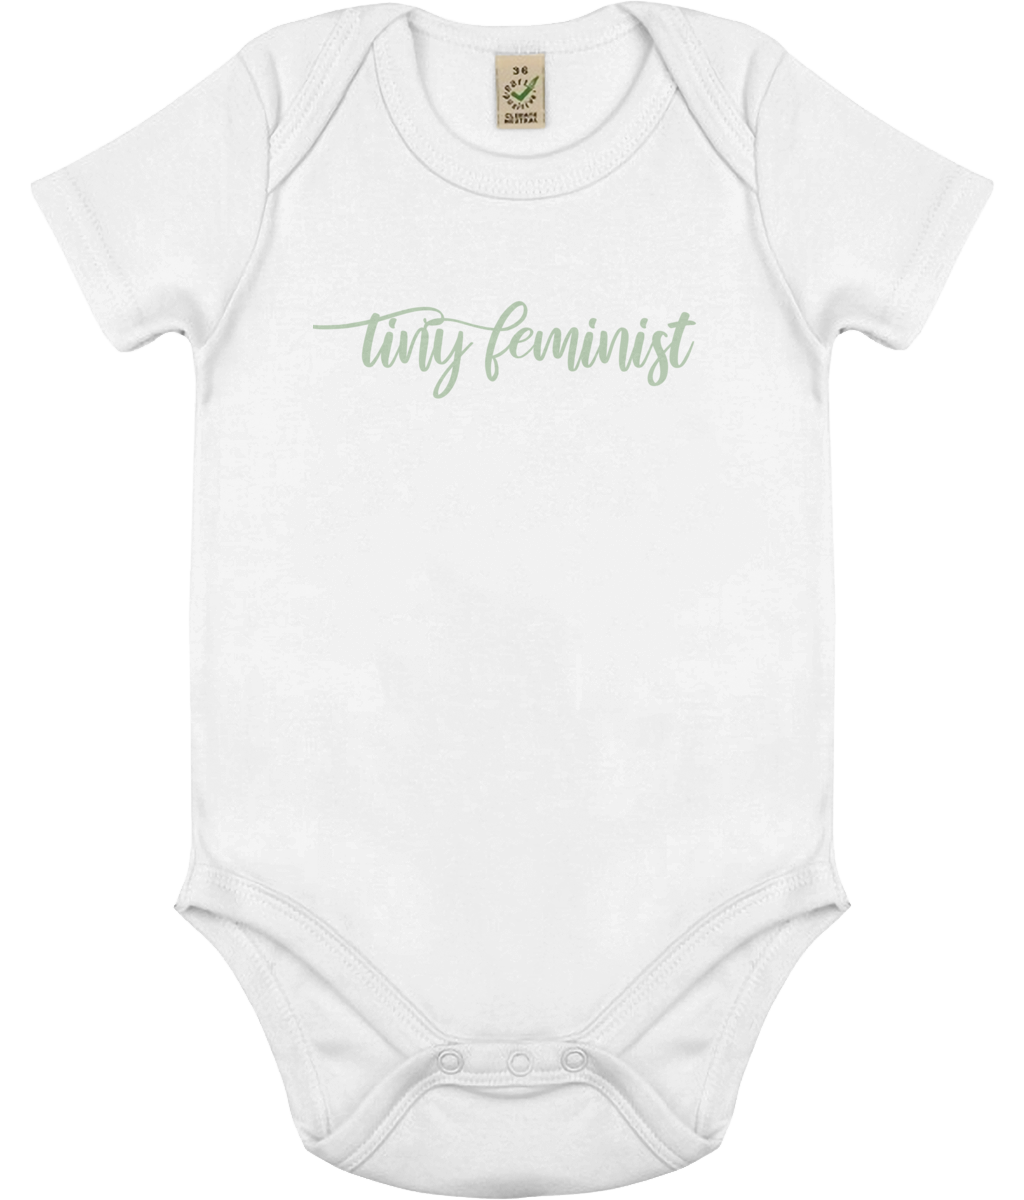 Tiny Feminist - organic baby body.